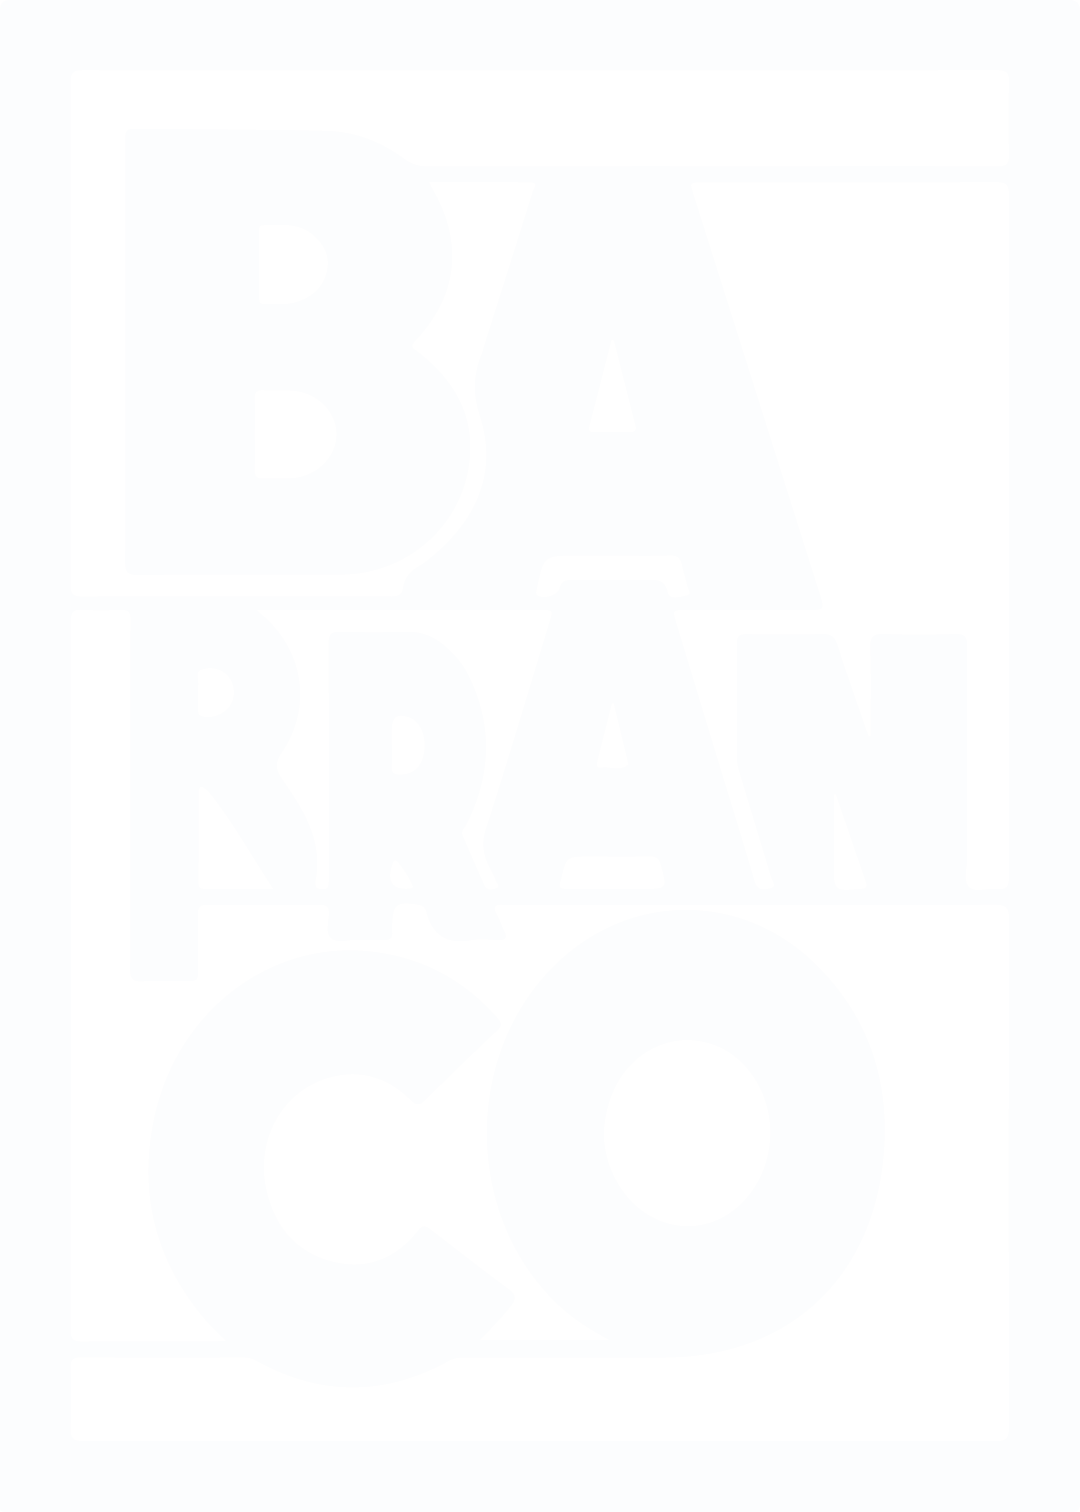 BARRANCO